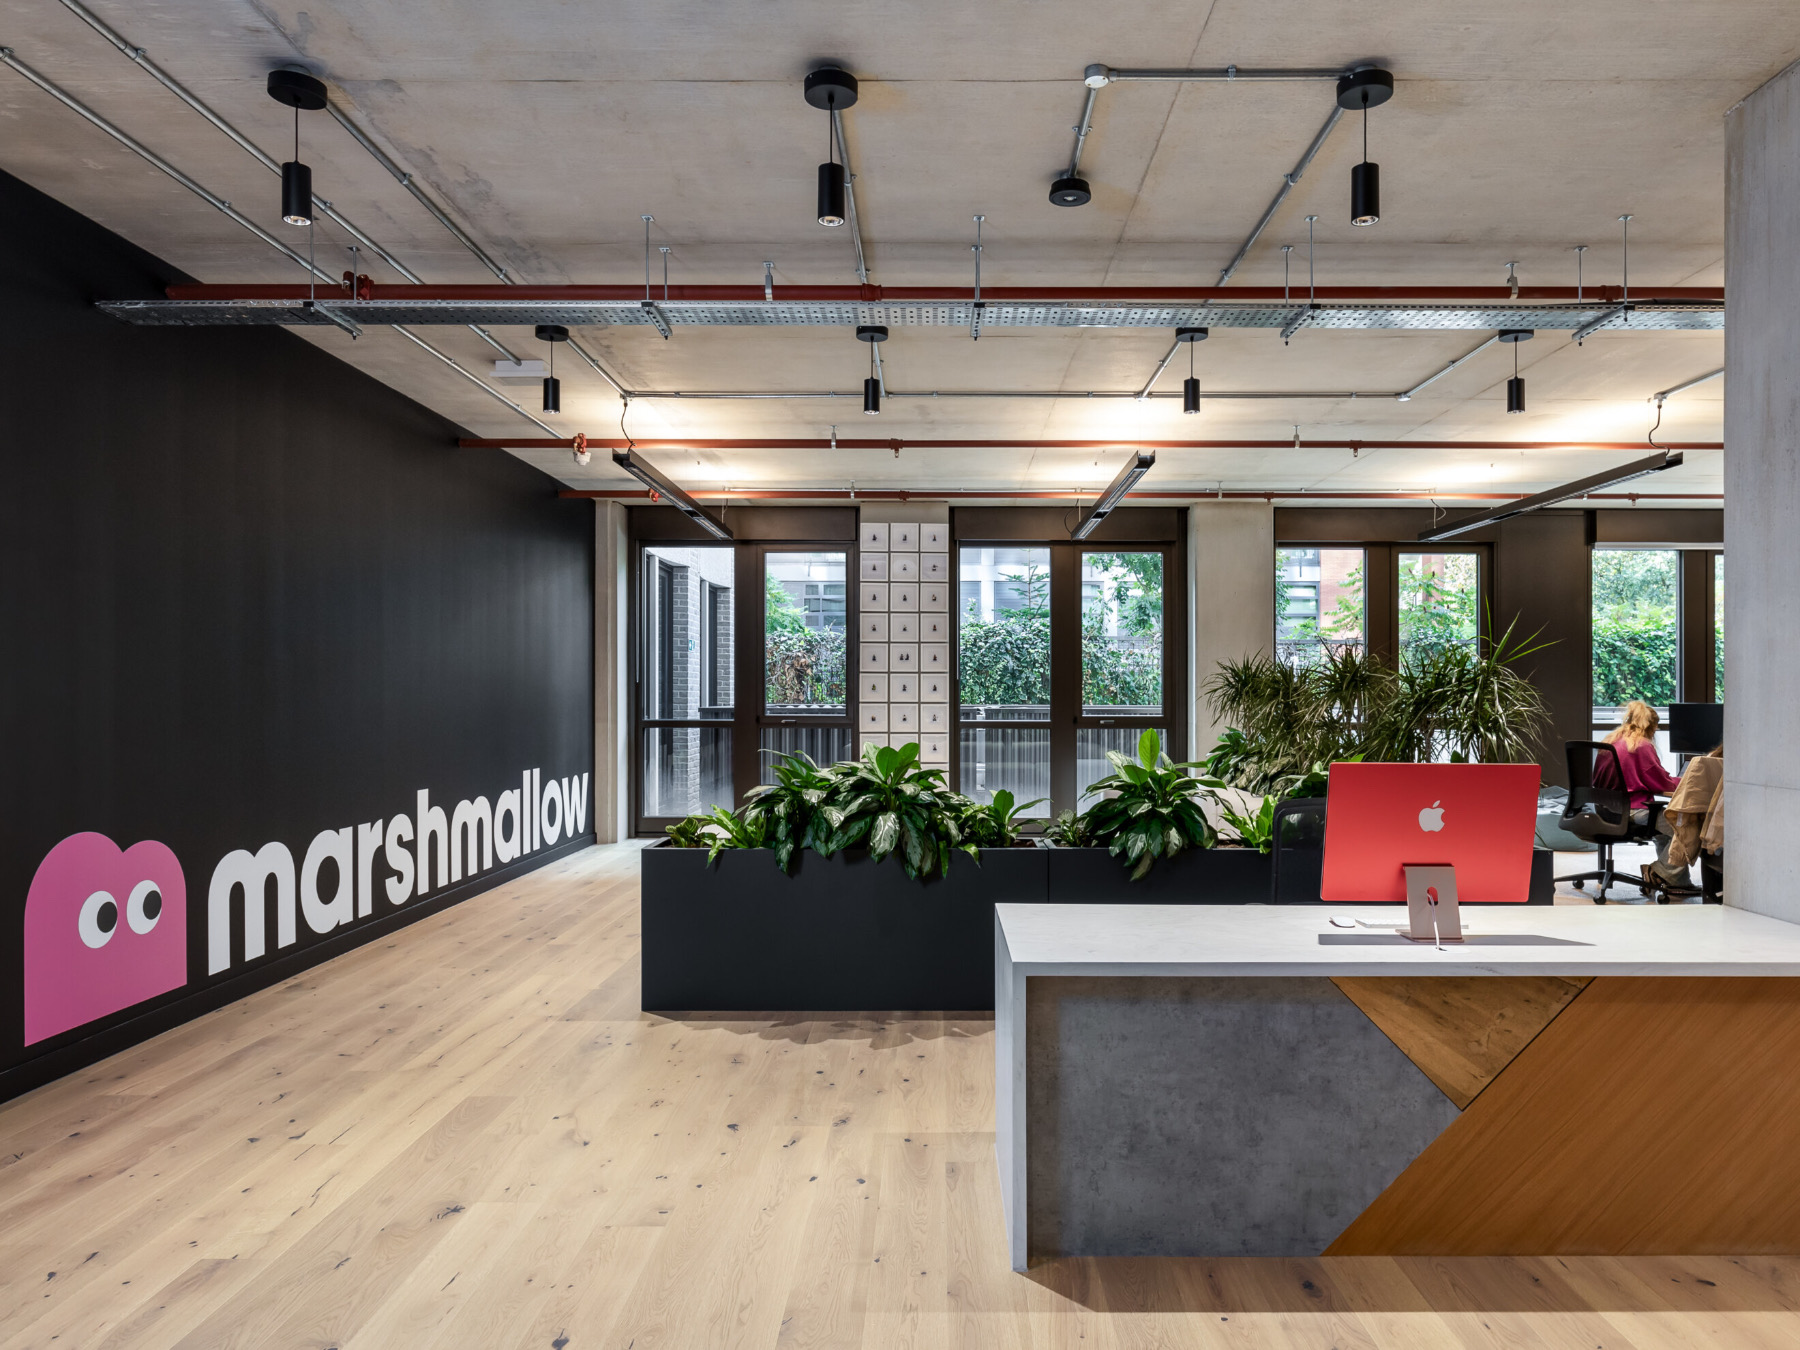 A Look Inside Marshmallow’s New London Office